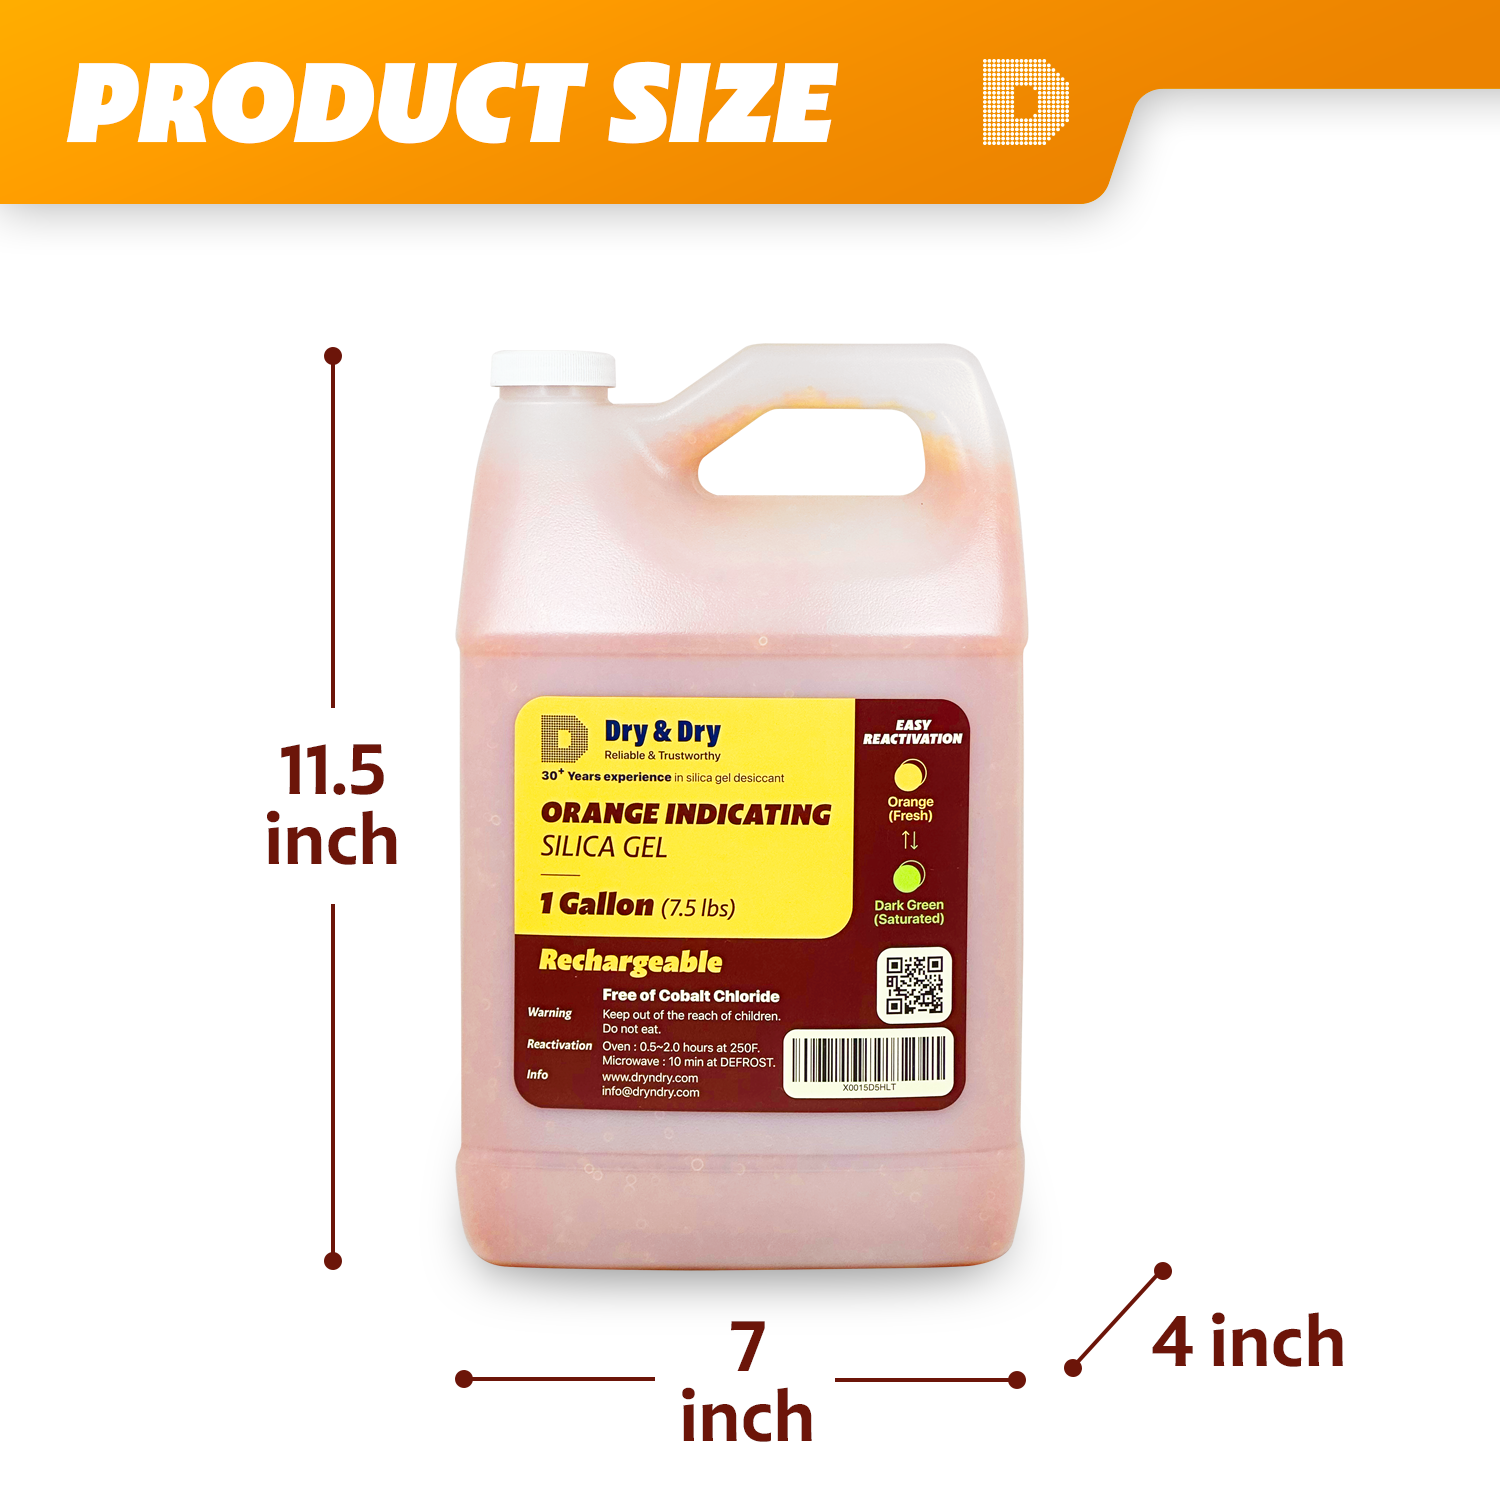 2 Gallon(15 LBS) "Dry & Dry" Premium Orange Indicating Silica Gel Desiccant Bead